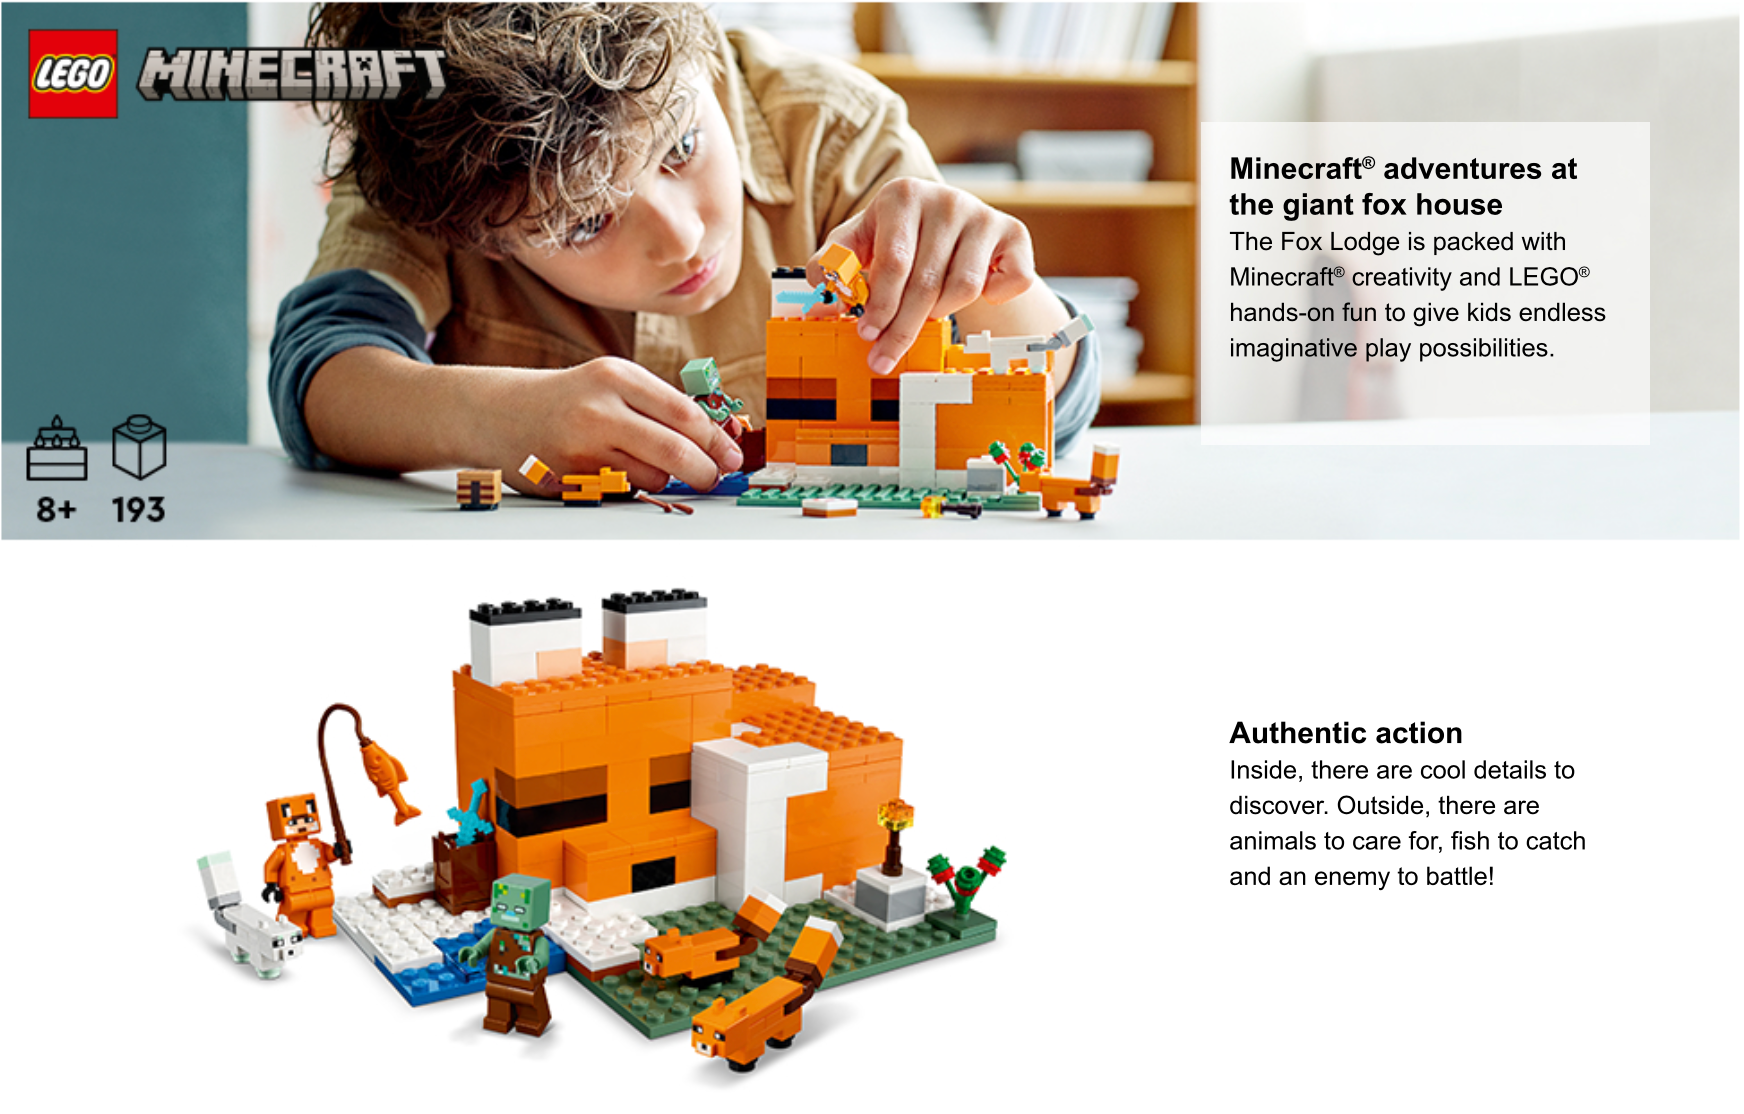 Figurine Lego® Minecraft - Héros Skin Renard